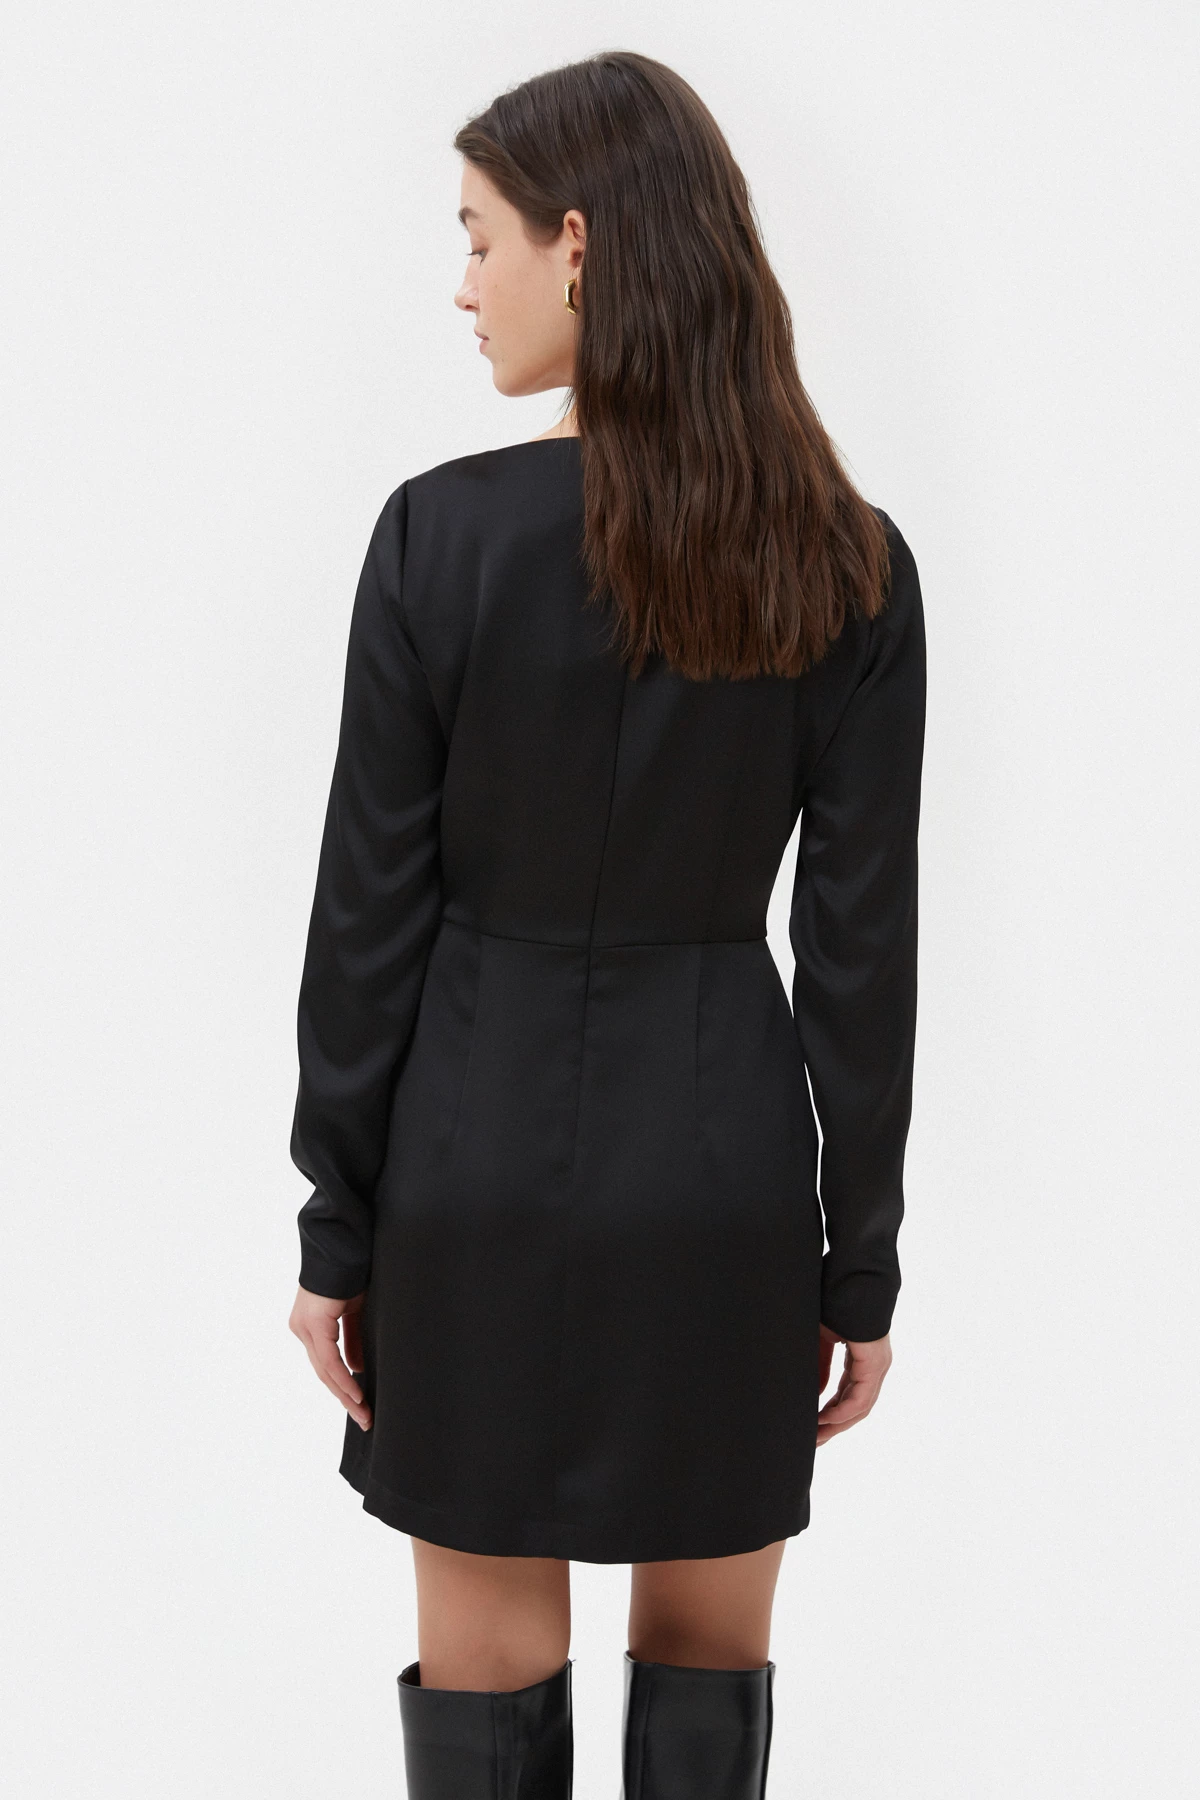 Short black satin dress with long sleeves , photo 4